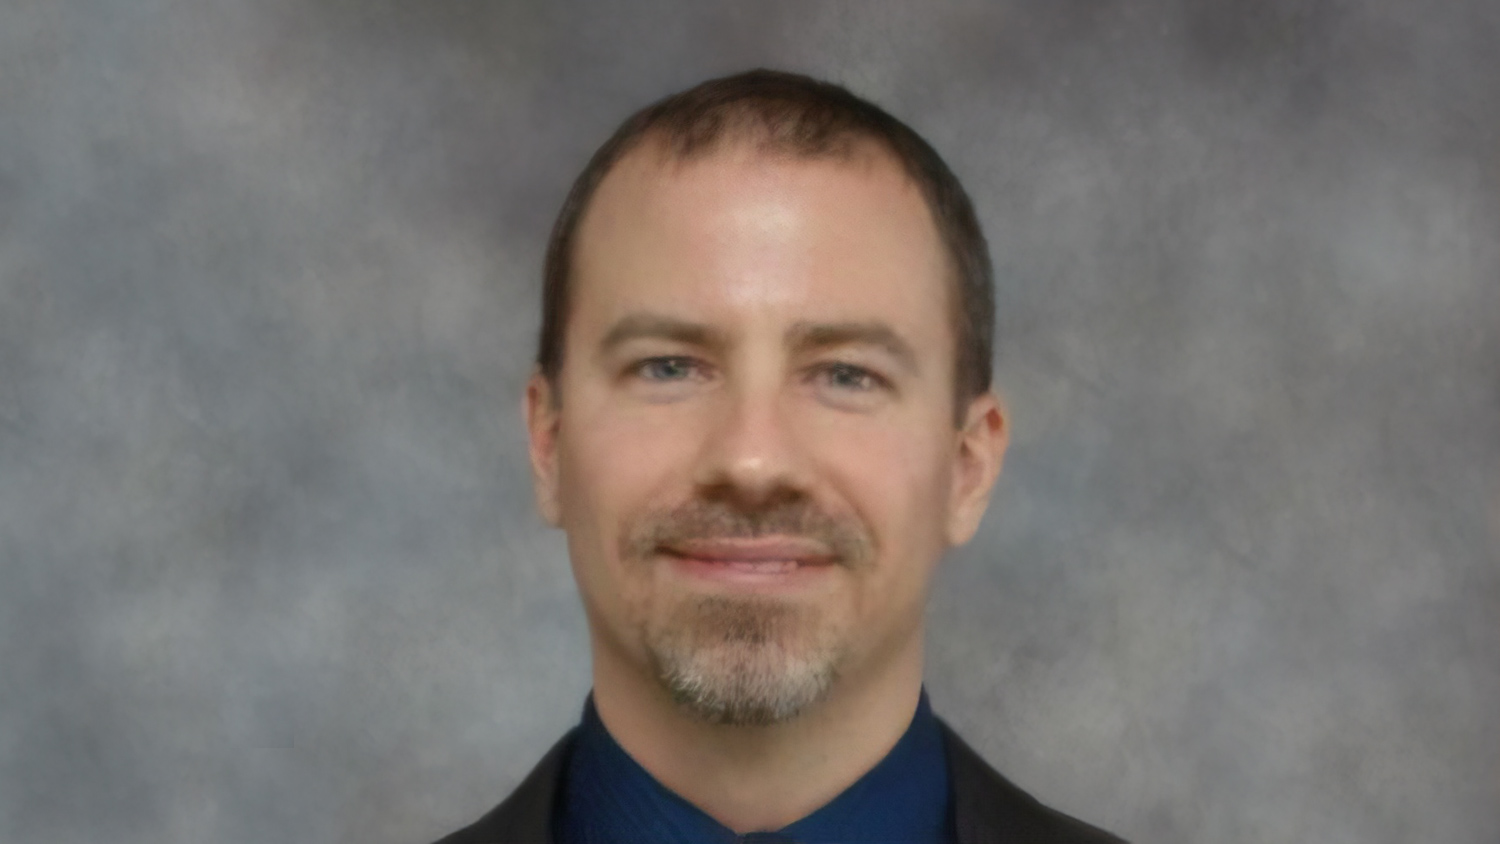 Portrait of Matthew Crump on gray background